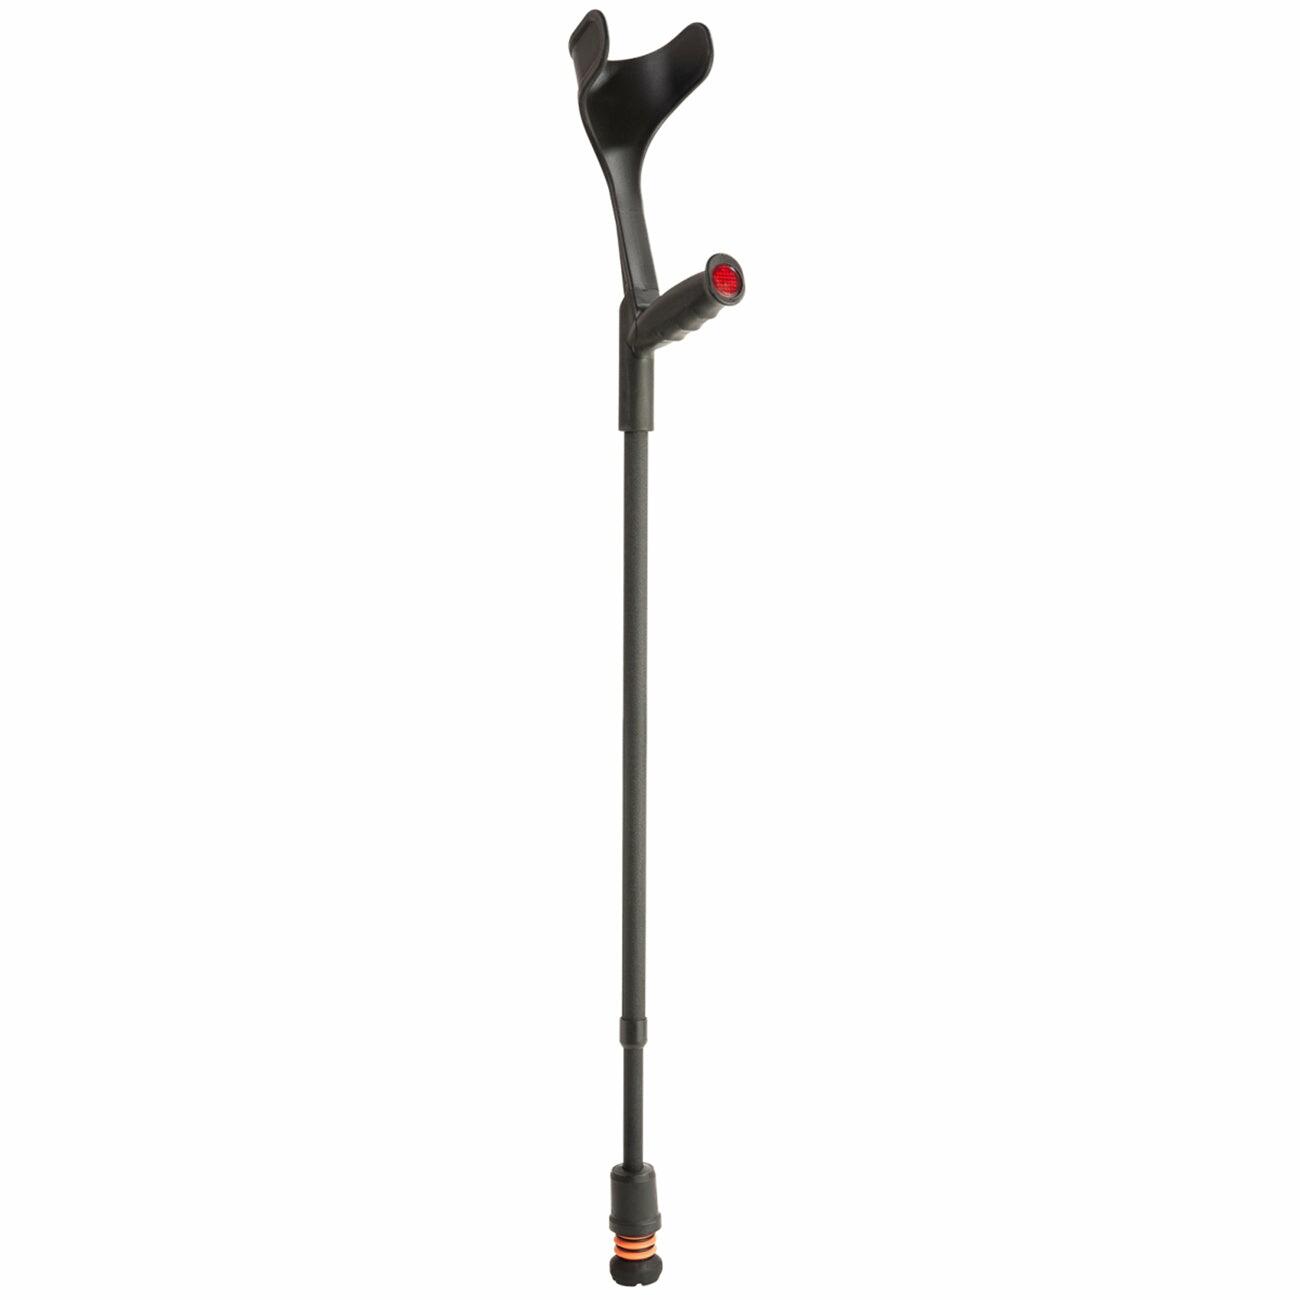 A single Textured black Flexyfoot Soft Grip Open Cuff Crutch